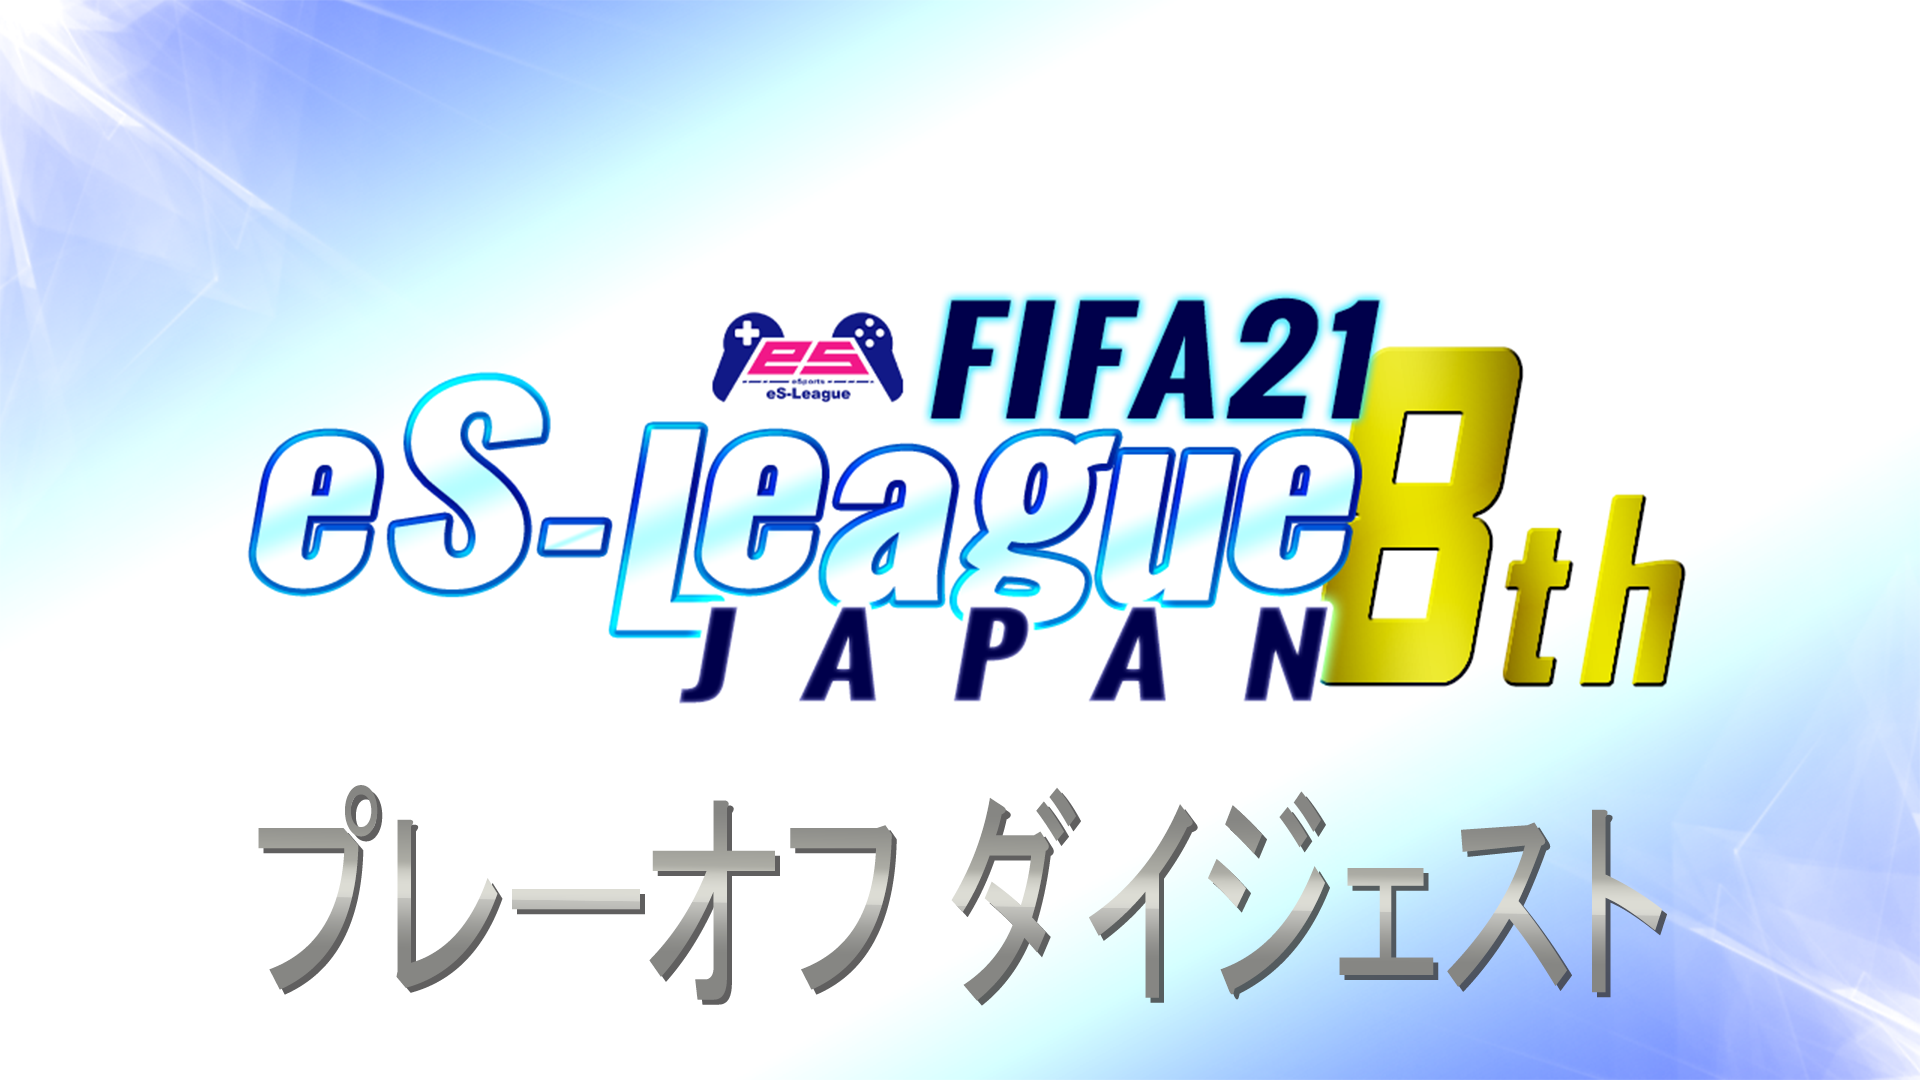 FIFA21 eS-League JAPAN 8th プレーオフ ダイジェスト